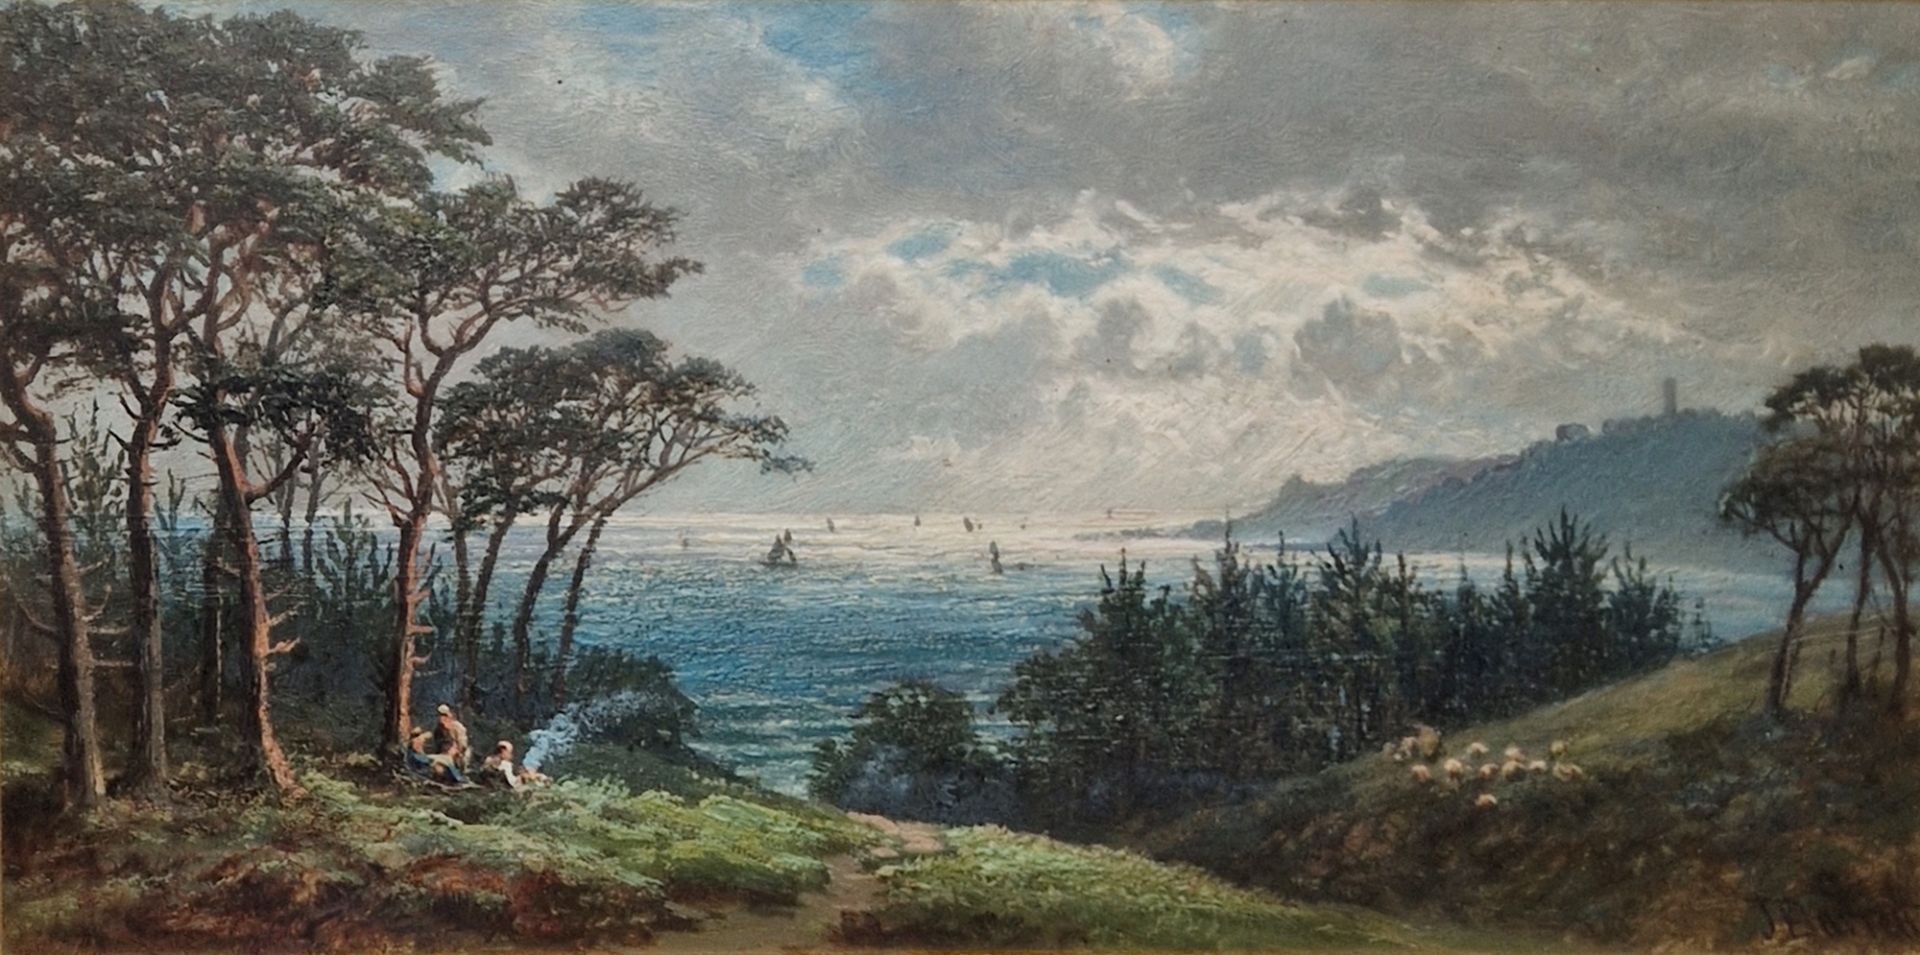 John Barrett (1822-1893) Oil on board Figures before woodland in seascape, signed lower right, 15.